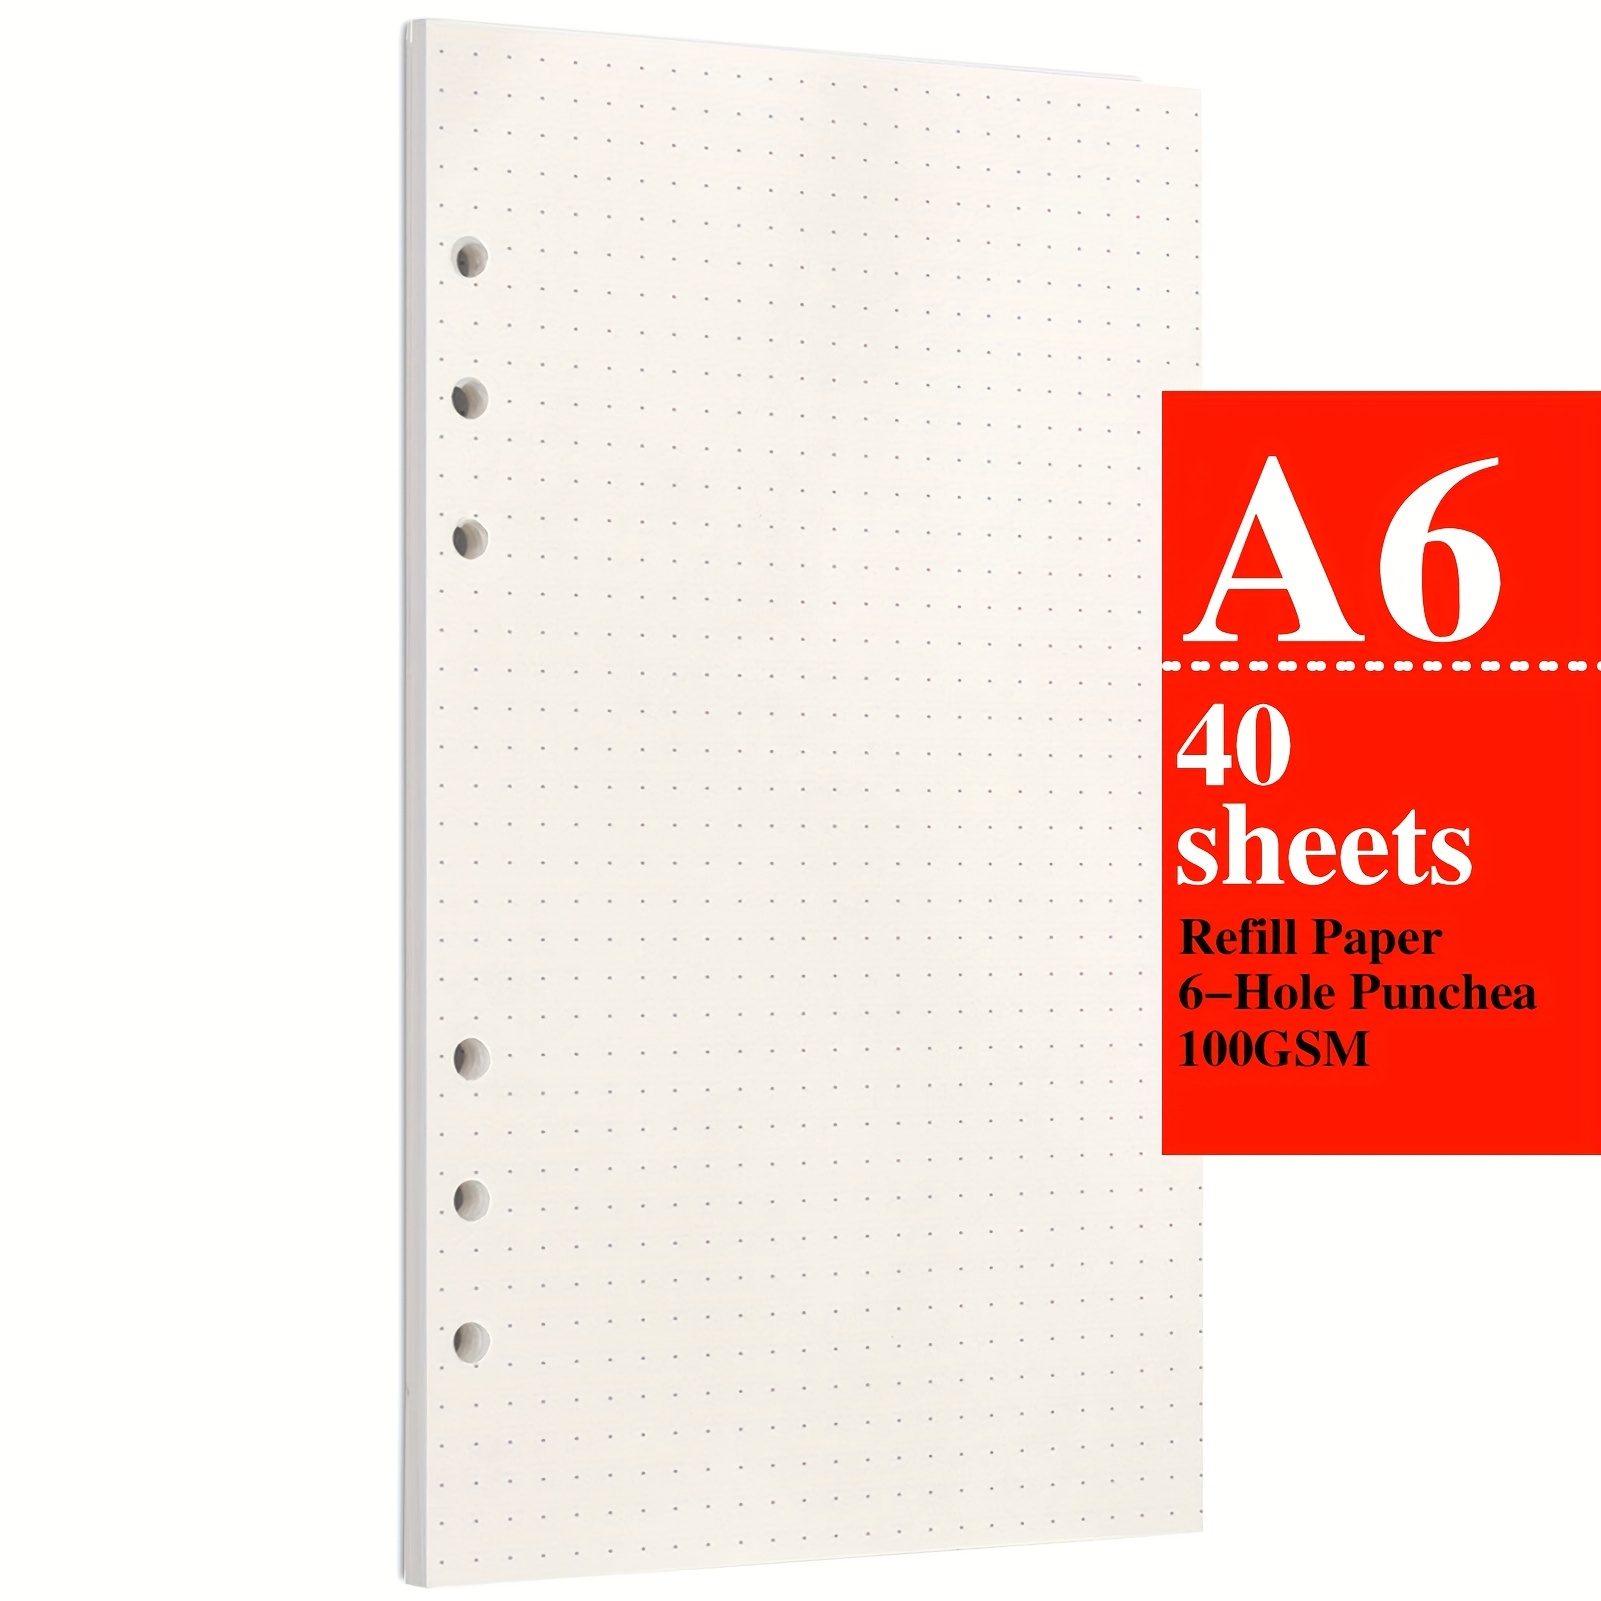 A5 Slim Transparent PVC Loose Leaf Notebook Cover Planner Agenda